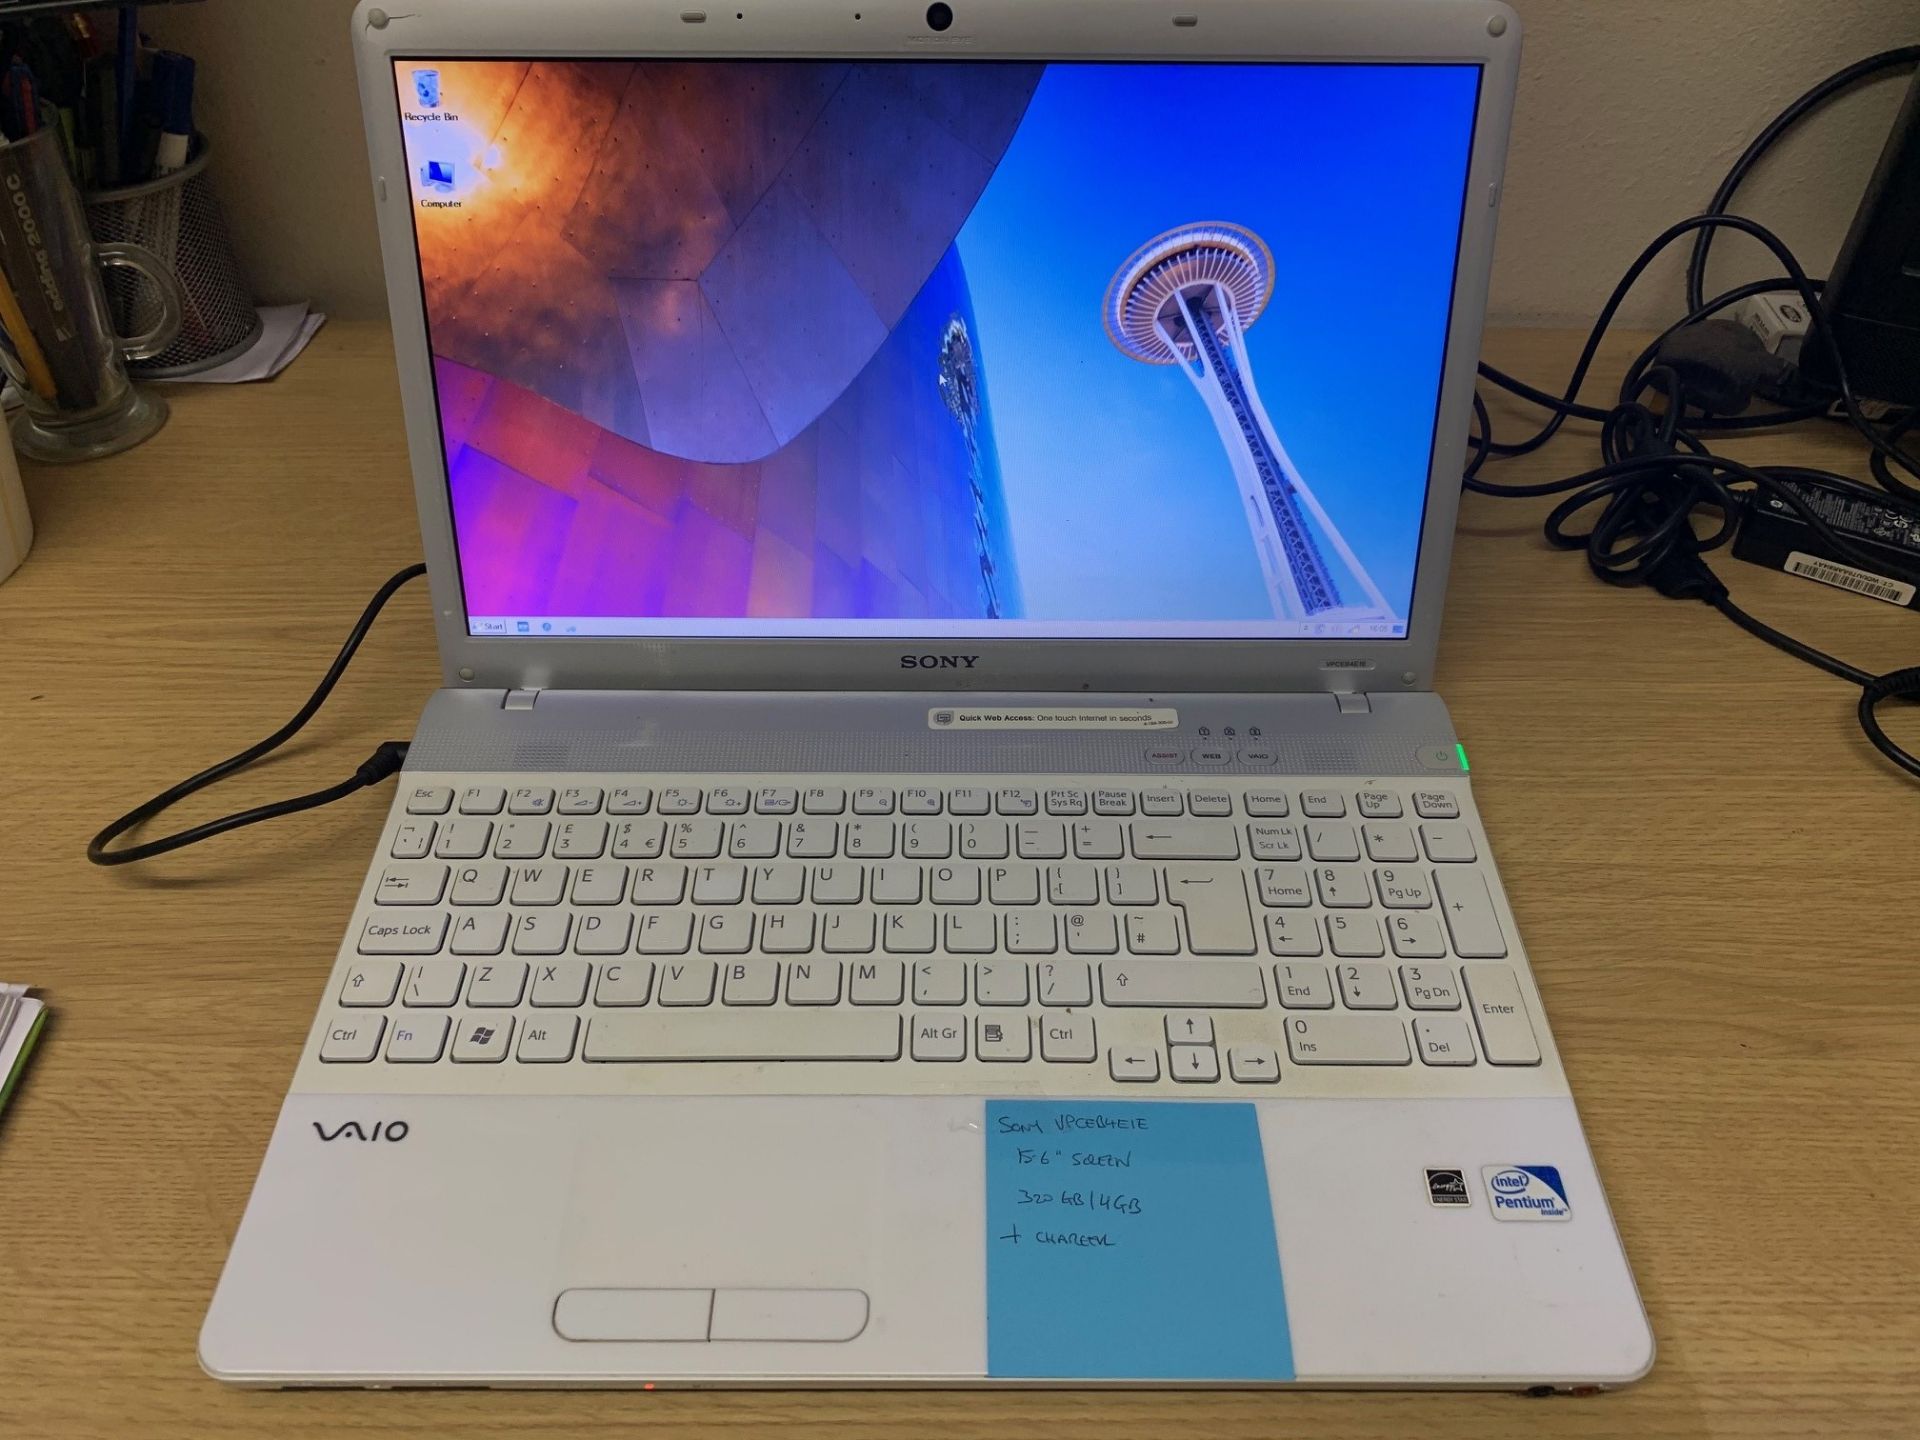 Sony Vaio VPCEB4E1E Laptop - 320GB Hard Drive, 4GB RAM, 15.6" Screen, Loaded With Windows 7 &